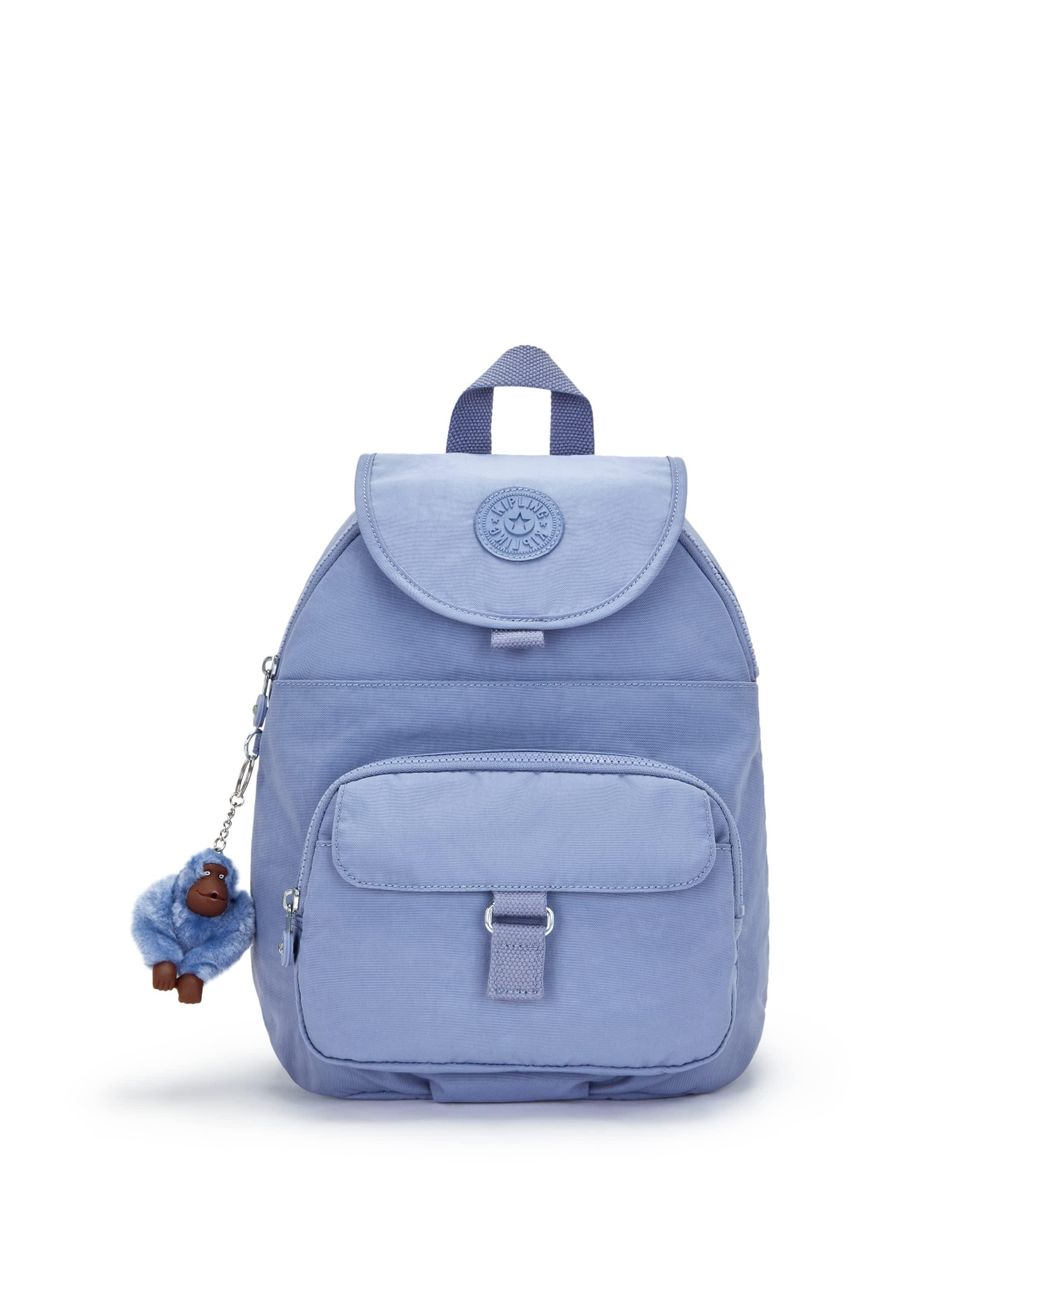 Kipling CITY PACK S Small Backpack - Softly Spots RRP £87 | eBay